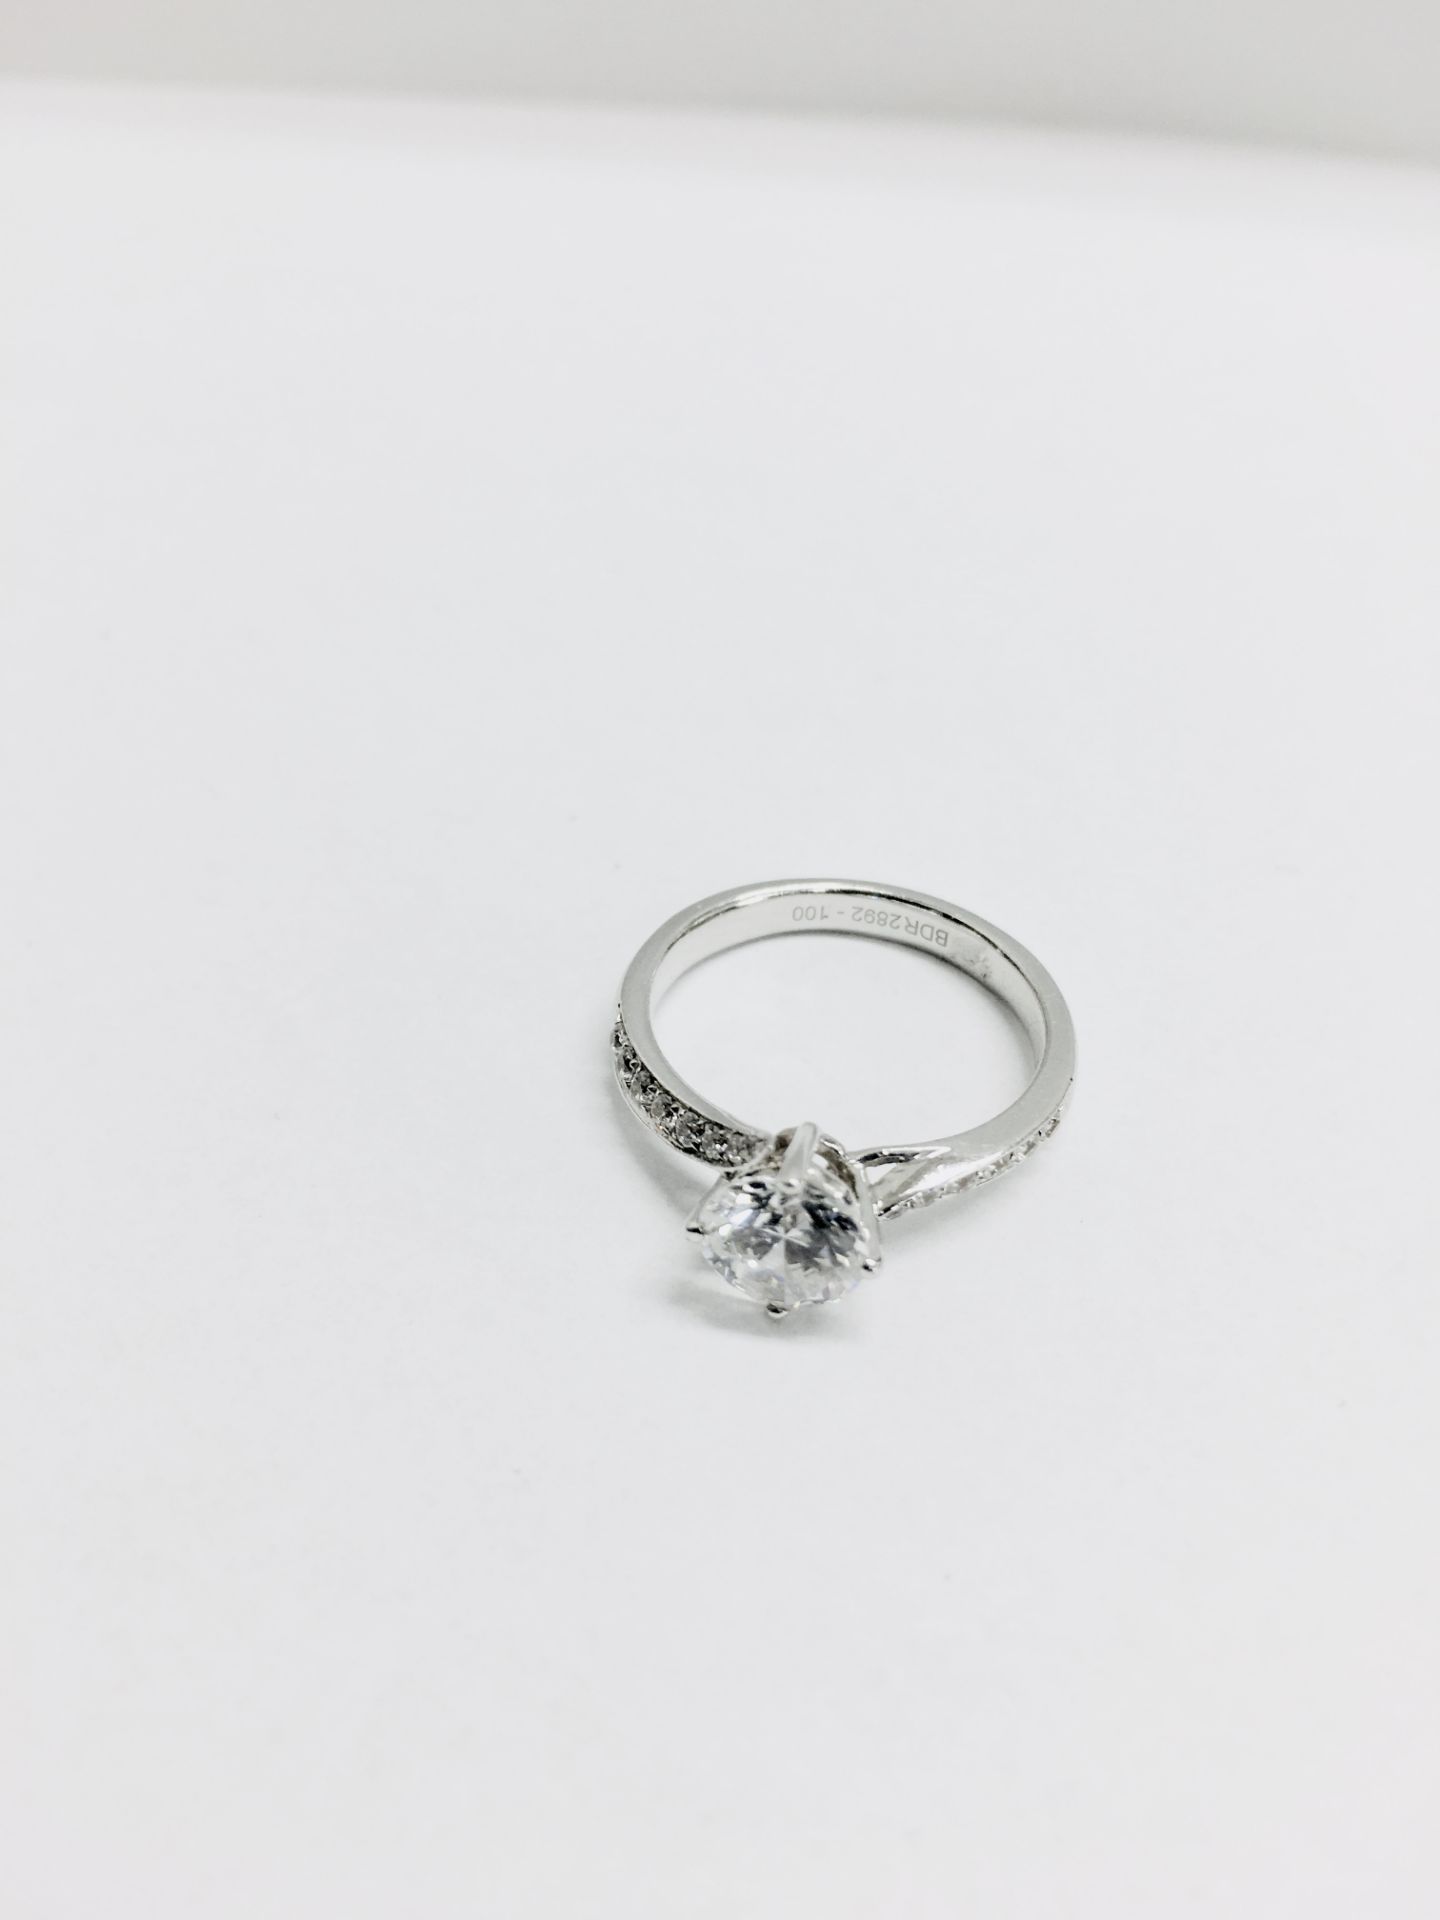 Platinum diamond solitaire ring ,0.50ct vvs1 clarity F colour natural brilliant cut diamond,3. - Image 6 of 7